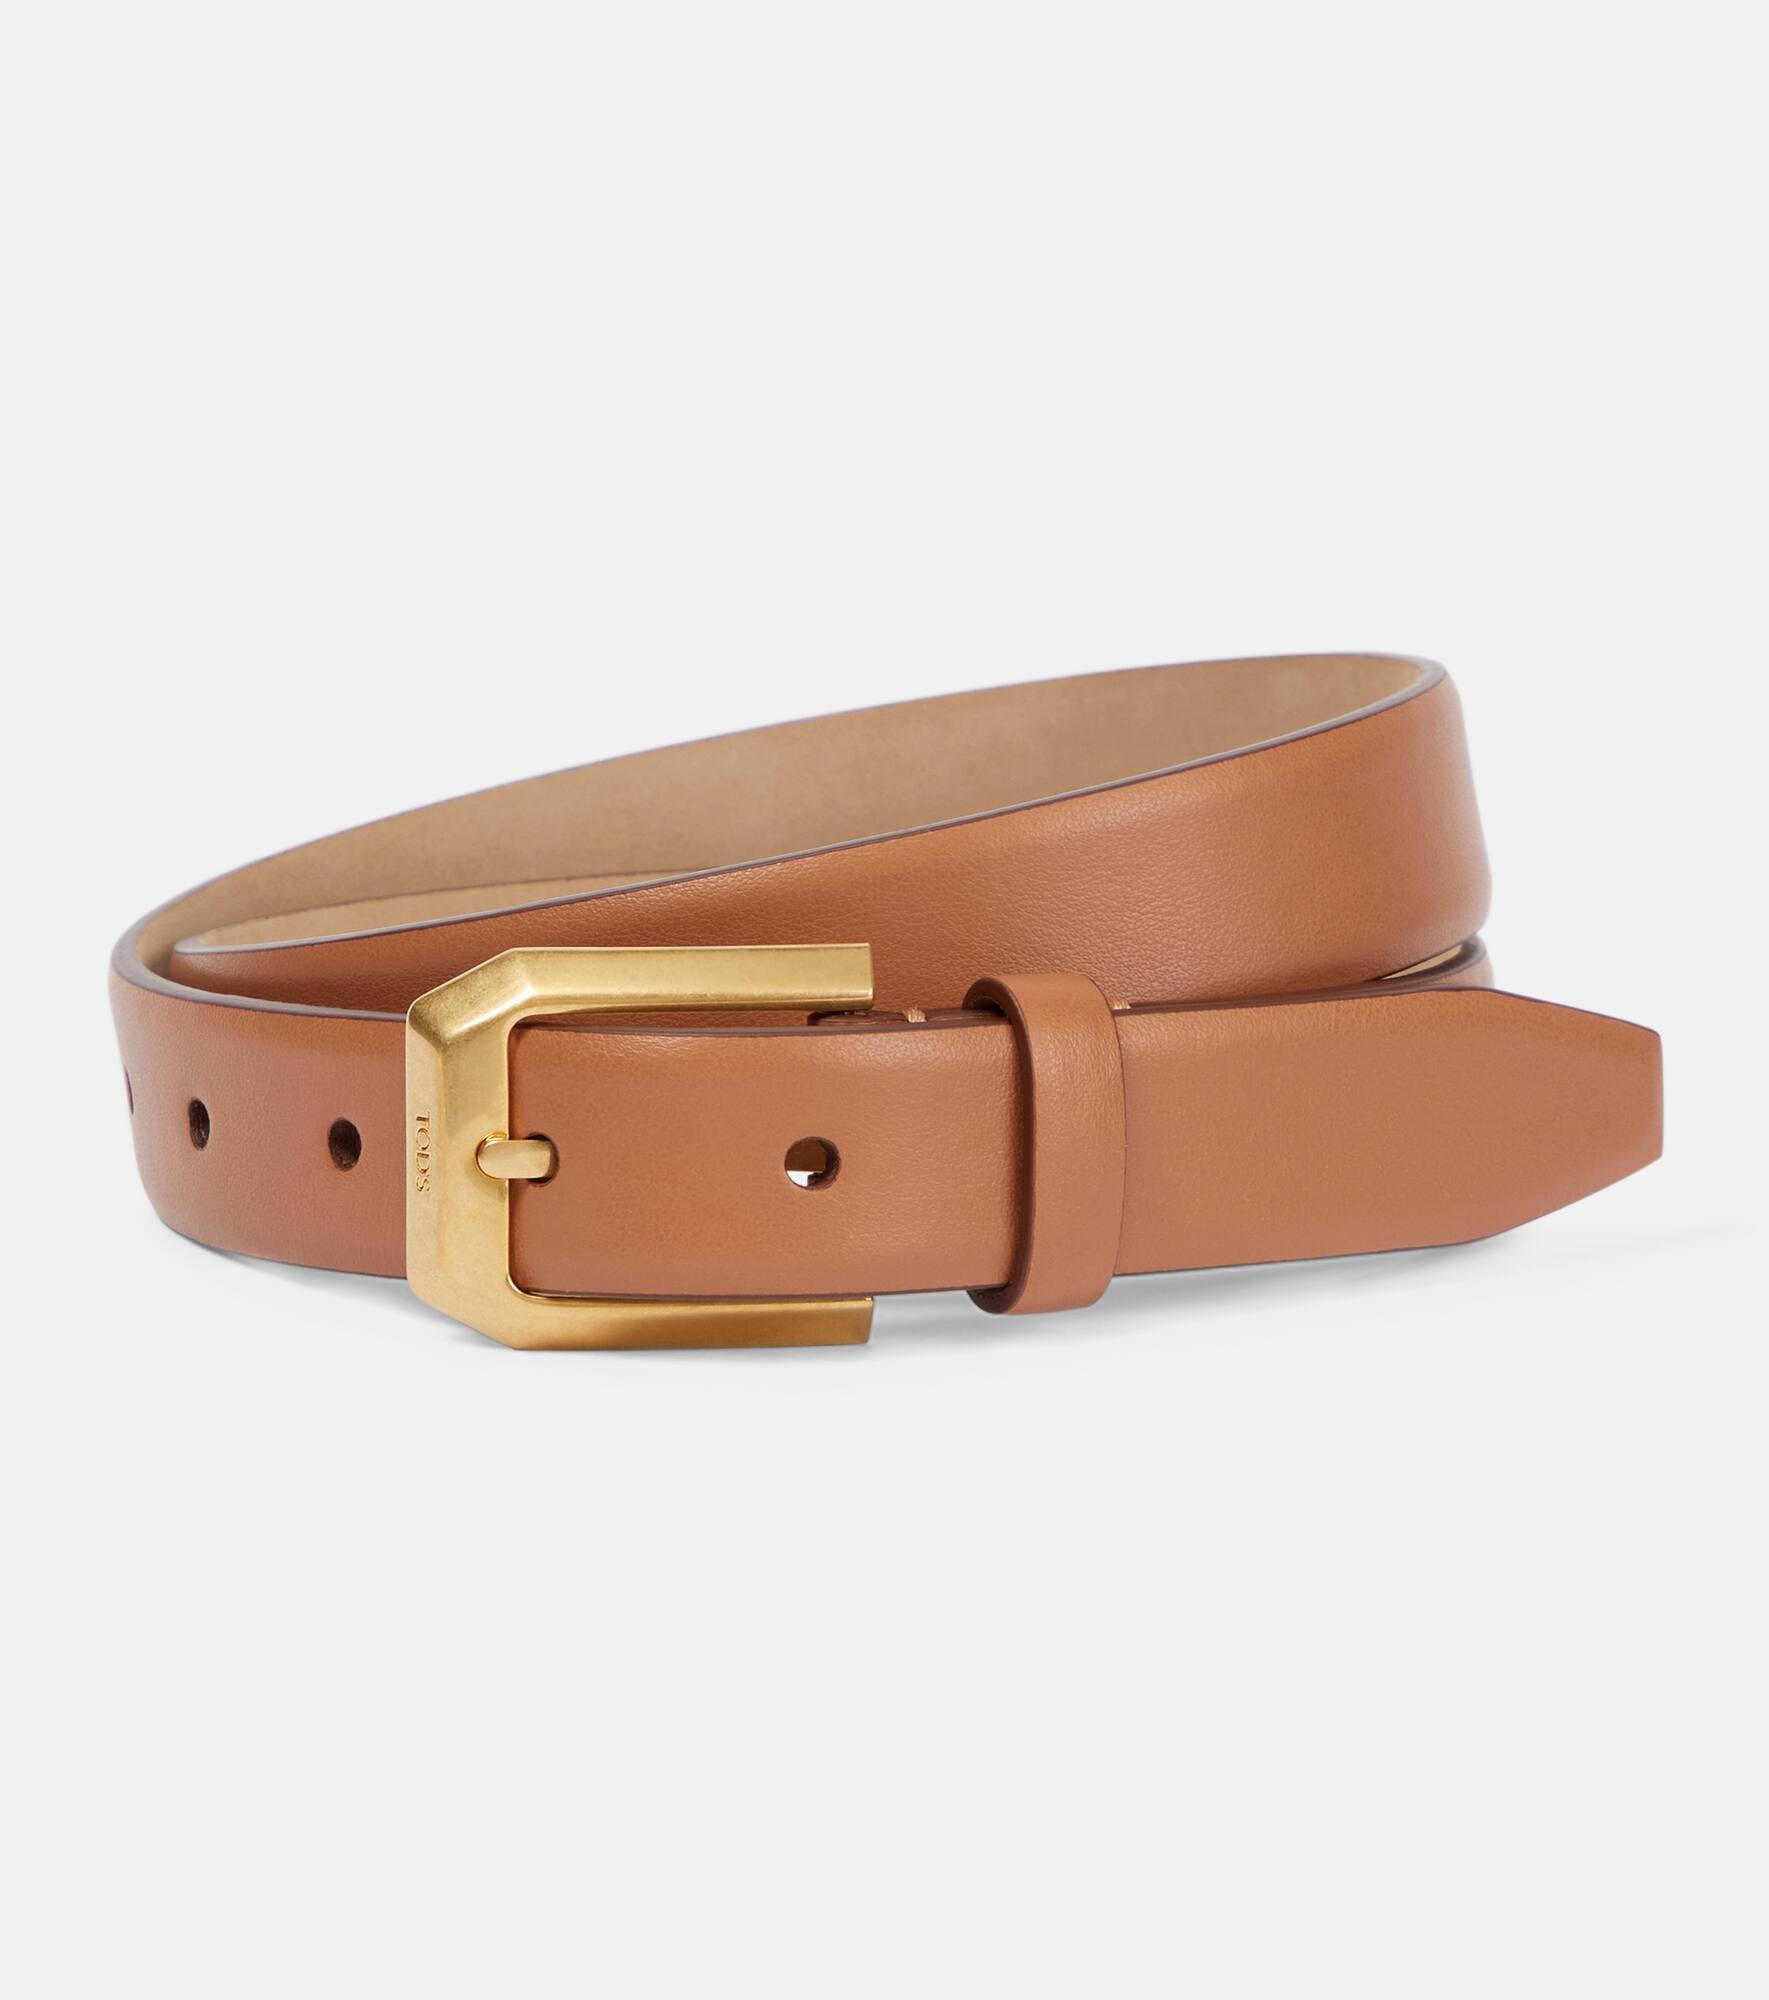 Luxor leather belt - 1